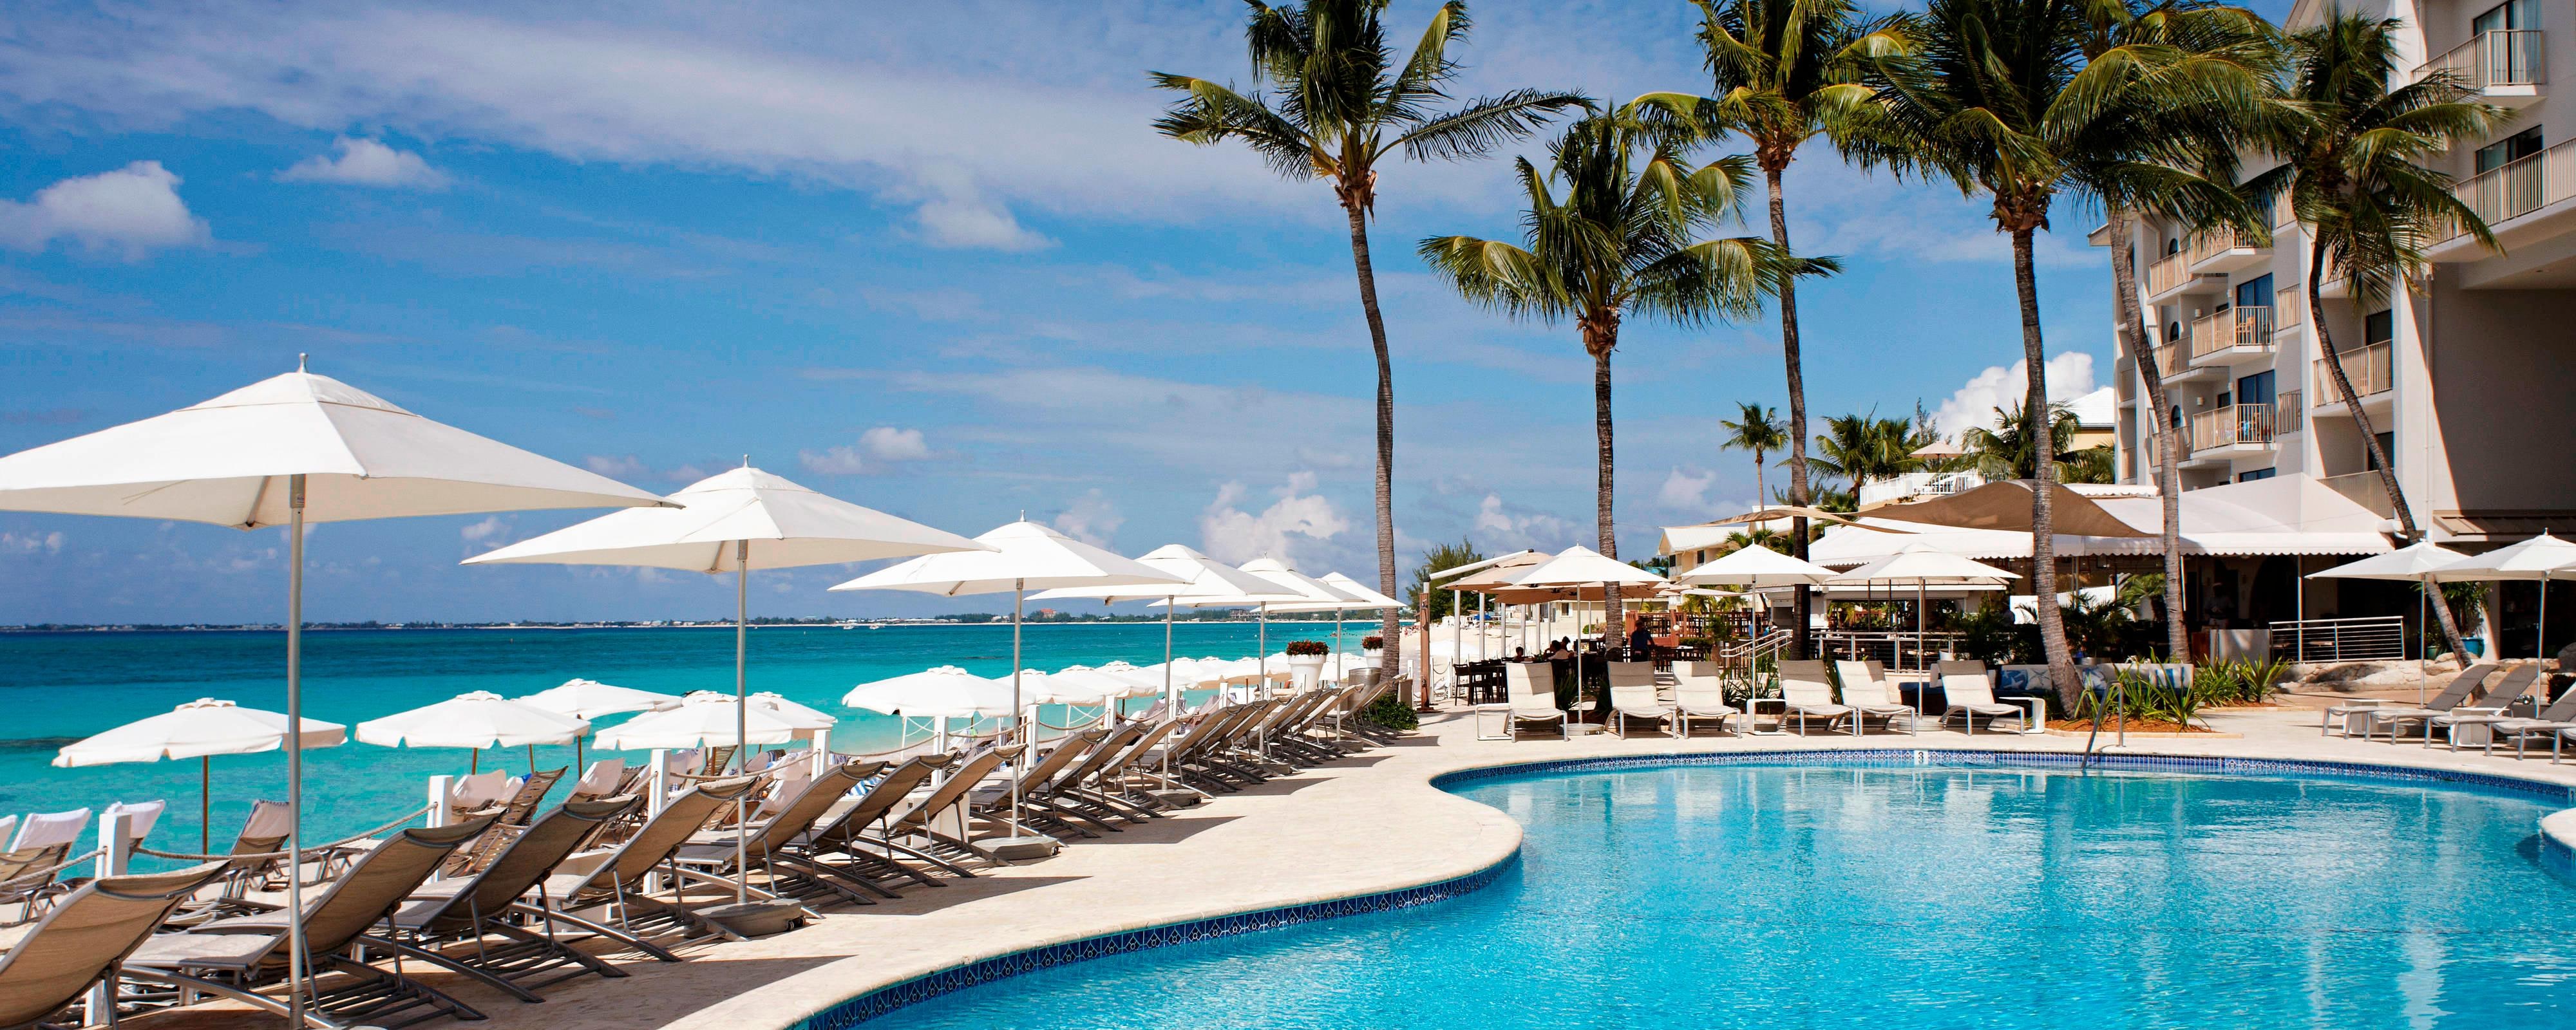 Grand Cayman Resort Gym and Outdoor Pool | Grand Cayman Marriott Beach